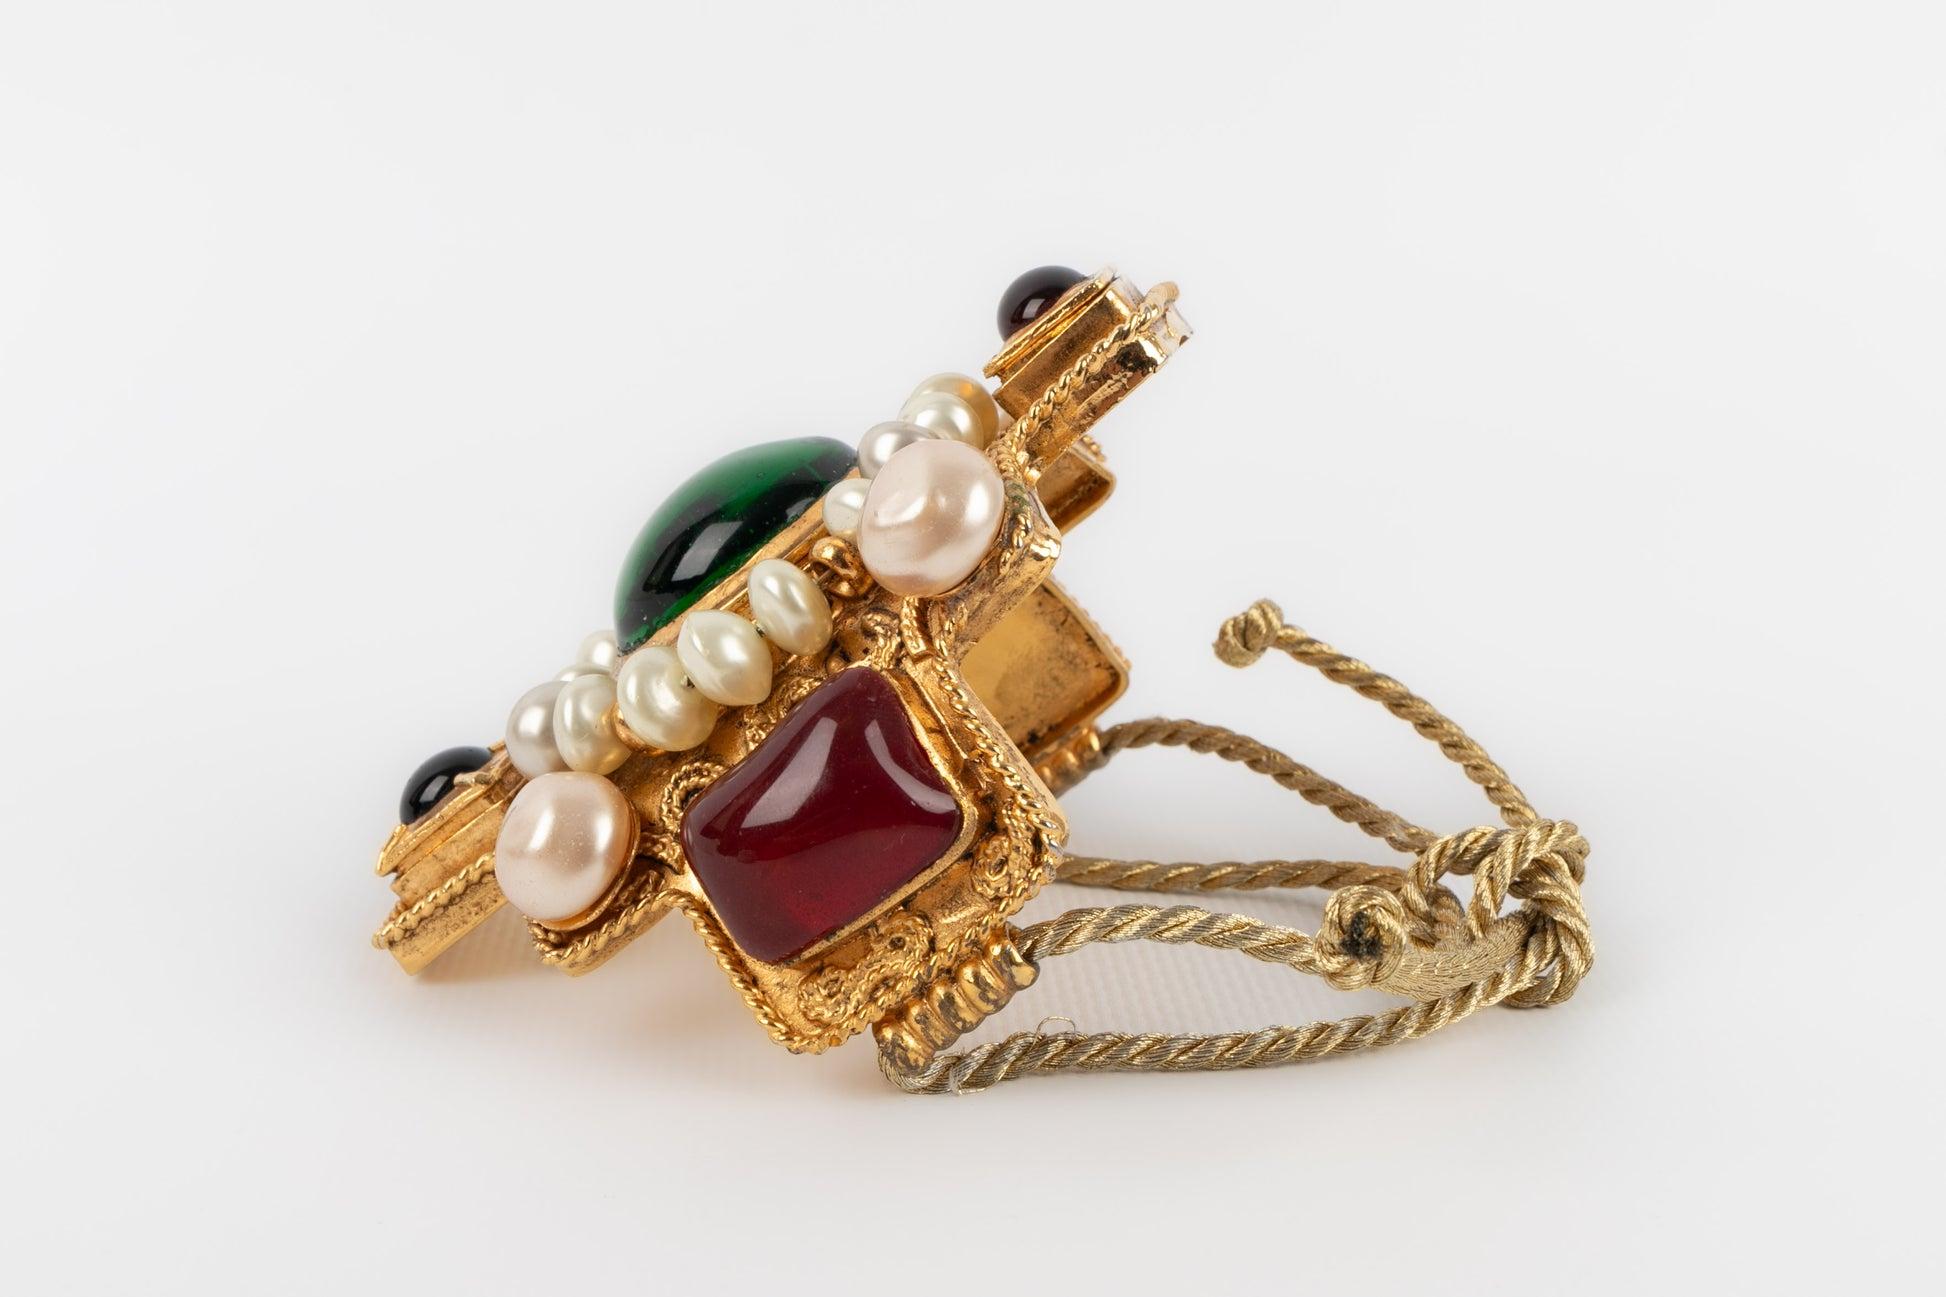 Chanel Arm Bracelet in Golden Metal, 1990/1991 1